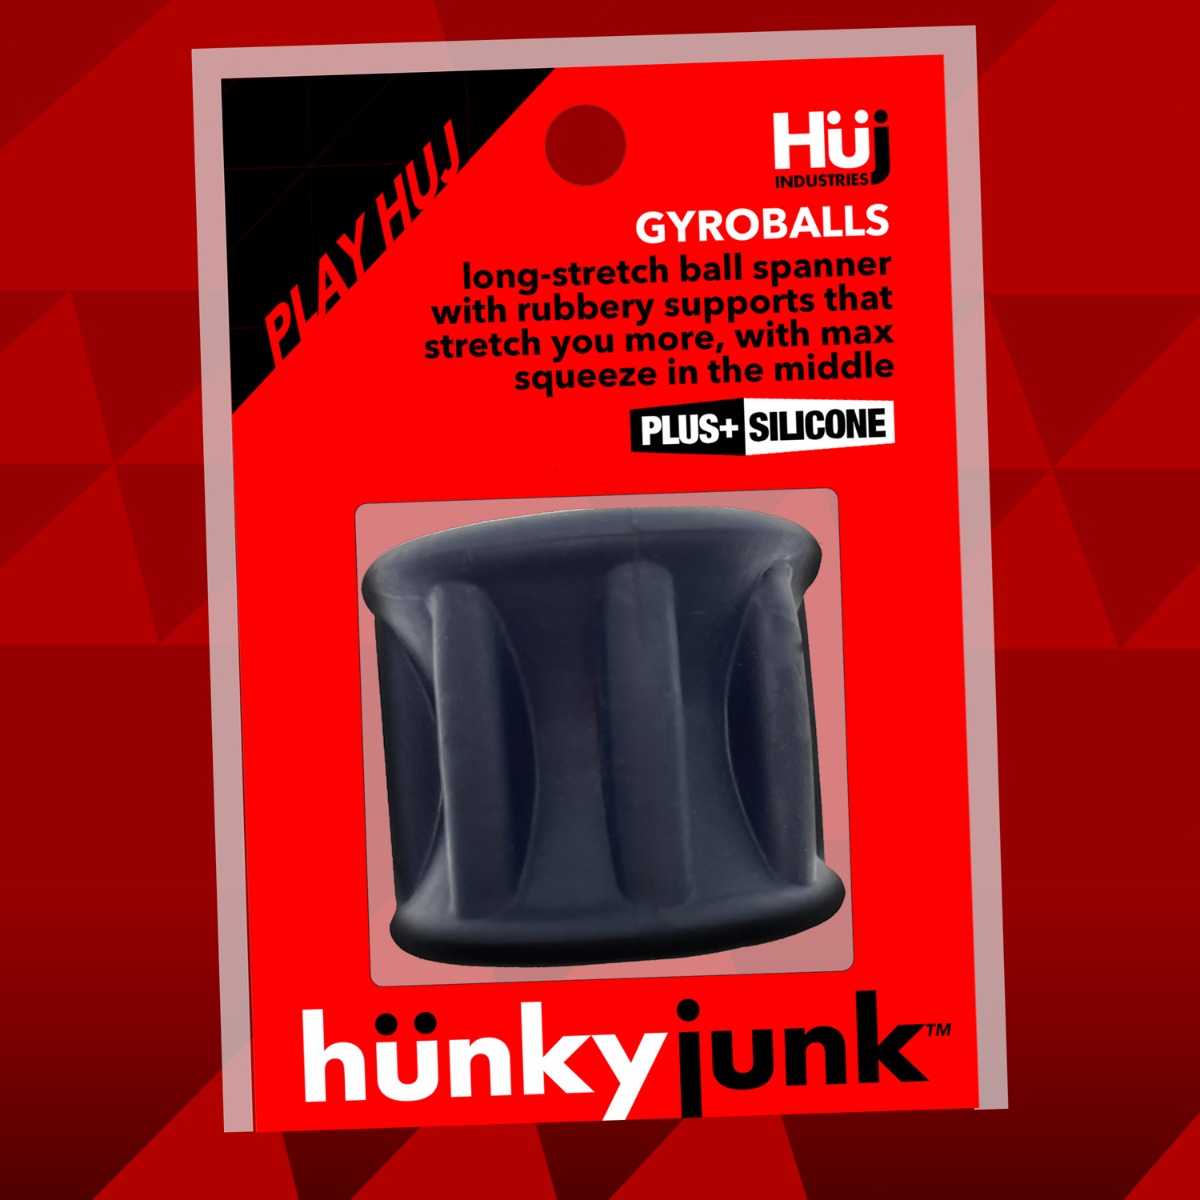 Hunkyjunk Gyroball Ball Stretcher Tar Ice (8124279652591)